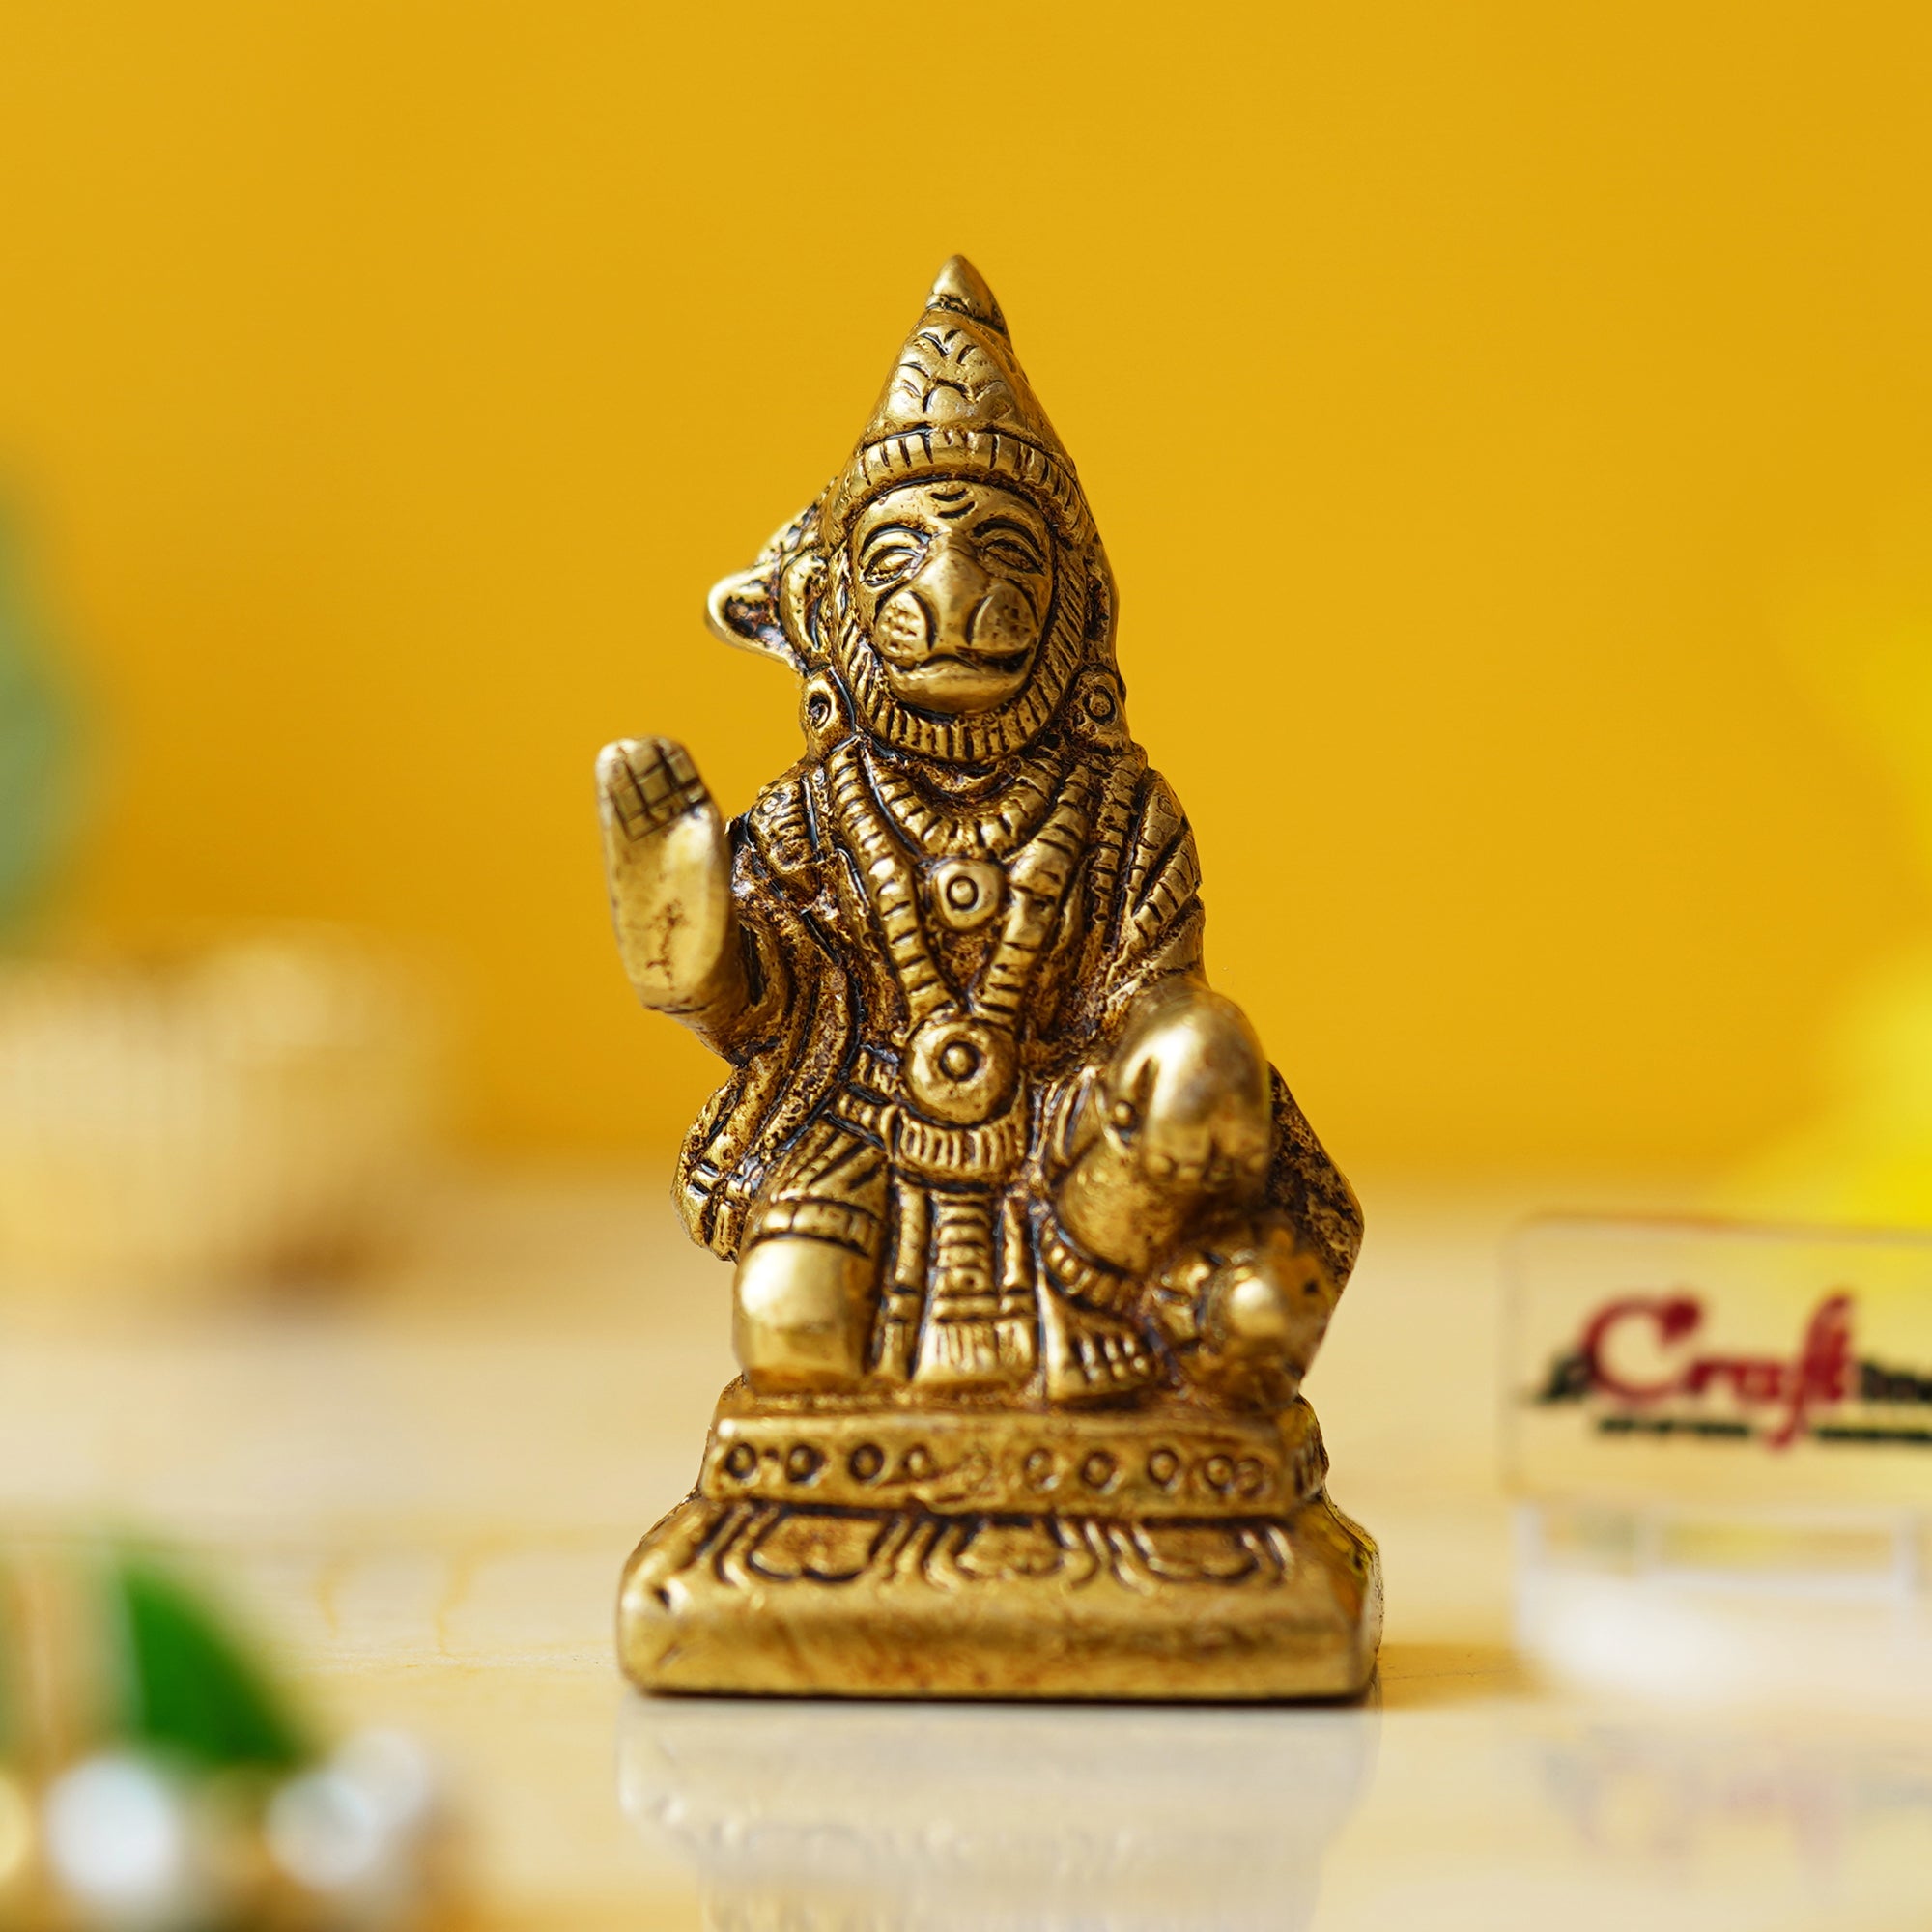 Golden Brass Blessing Lord Hanuman Statue Murti - Hindu God Idol for Home, Office, Temple Mandir - Hanuman Jayanti Gift